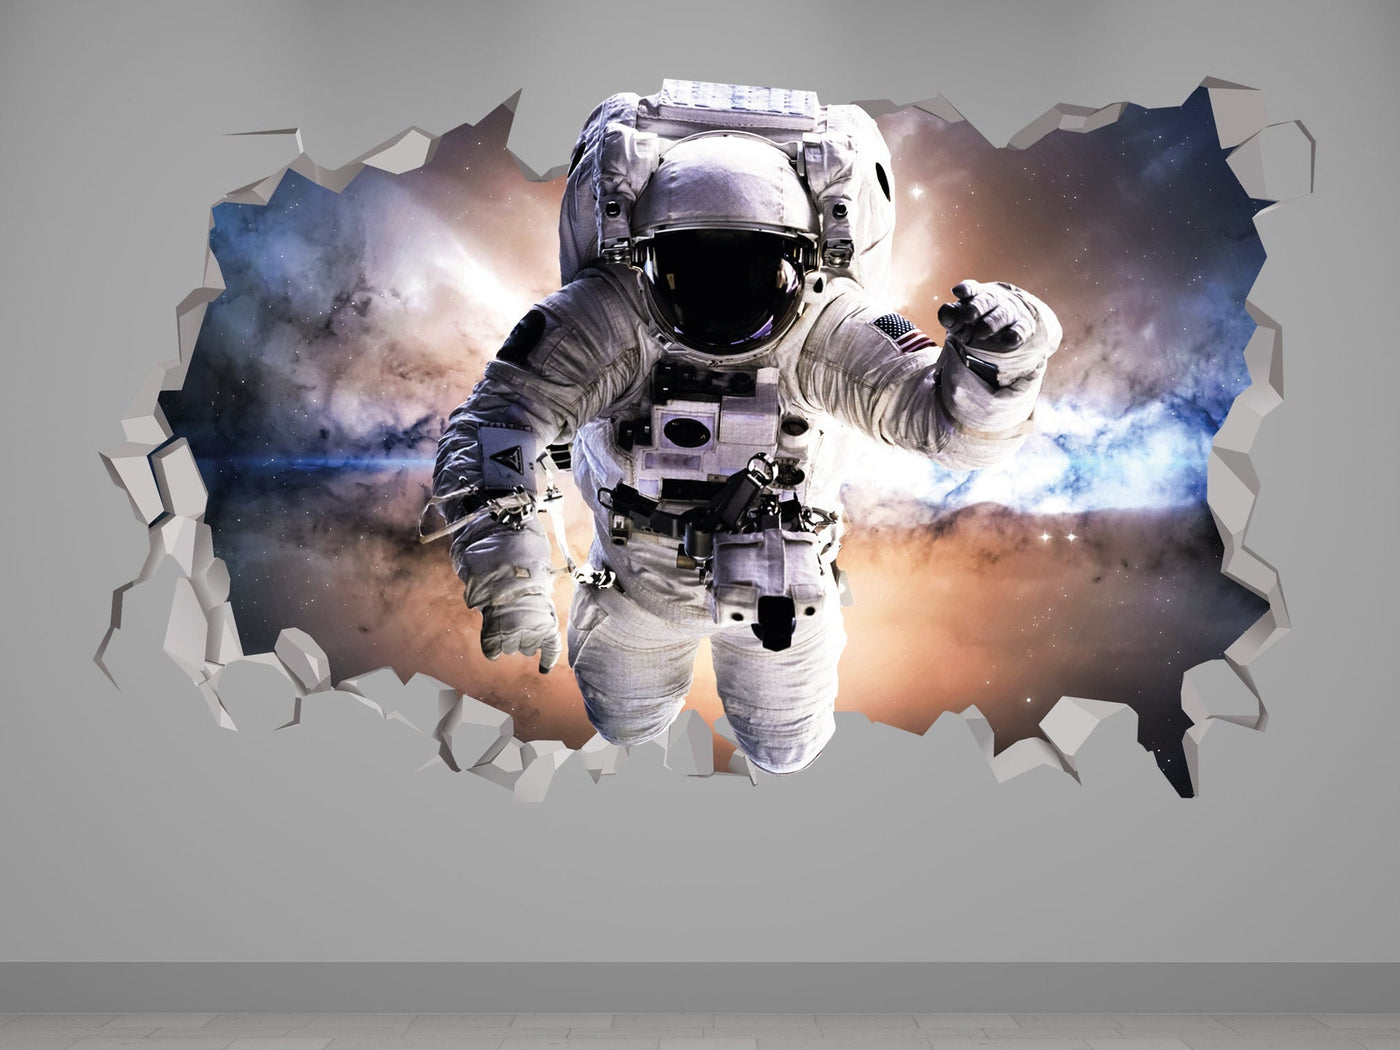 Parede adesiva de astronauta - Decalque de parede de astronauta - Cartaz de astronauta - Decoração de parede de astronauta - Arte de parede de astronauta - Decalque de parede de espaço